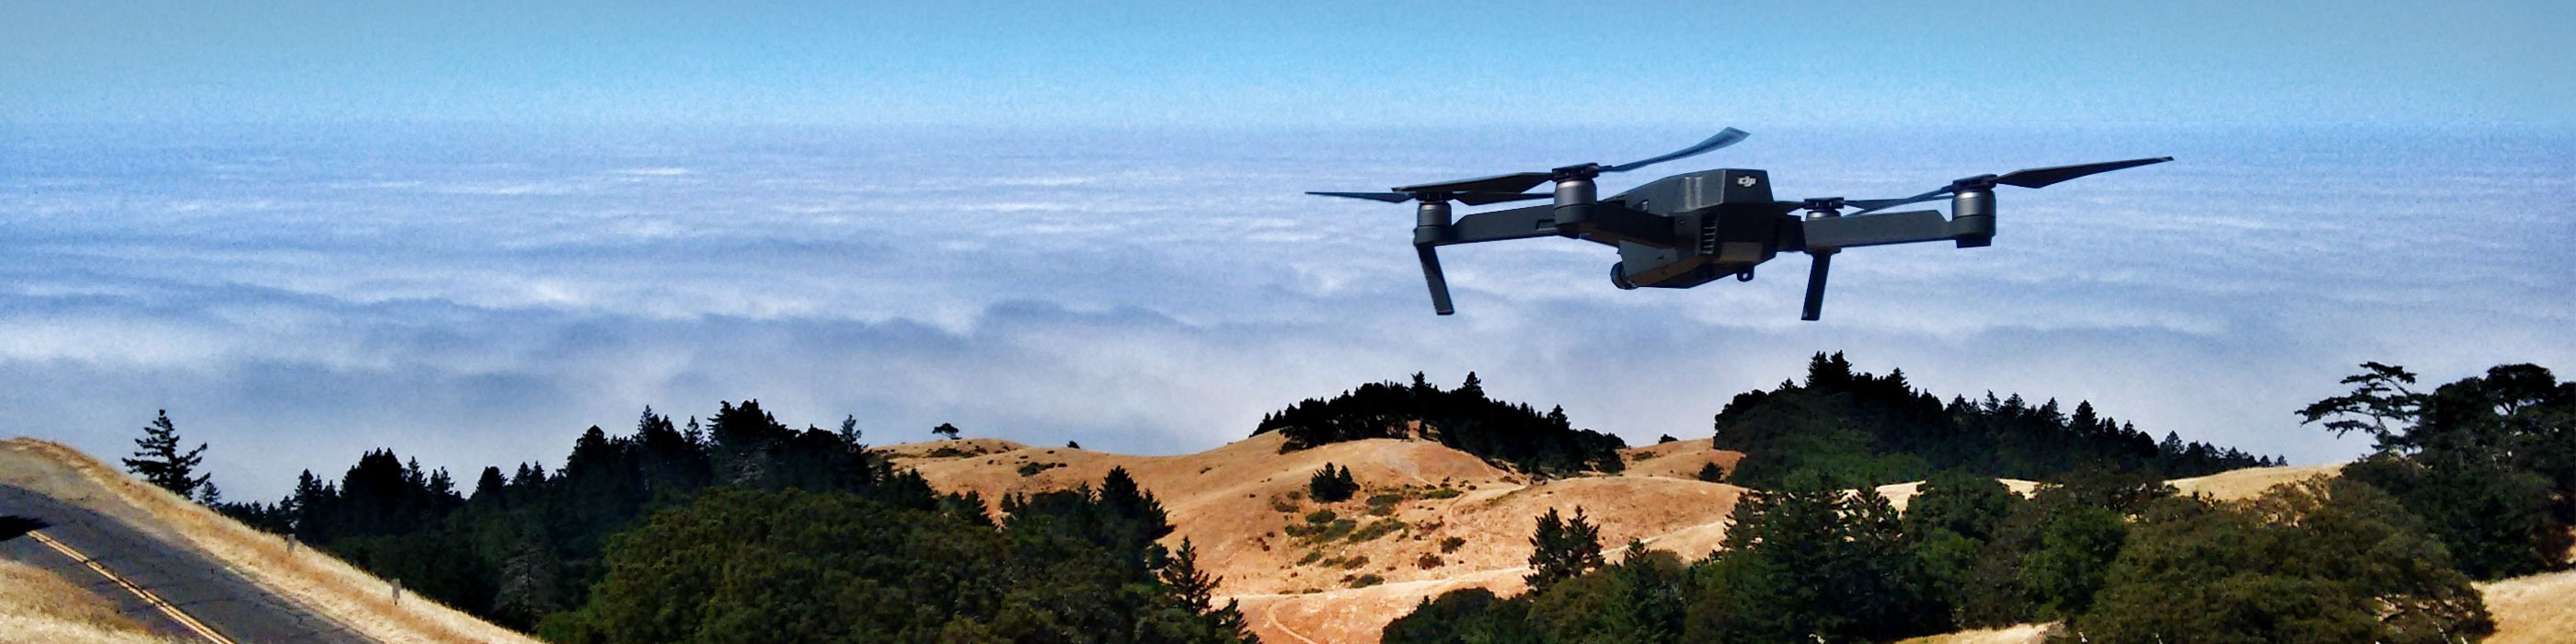 Aerospace and Autonomous Systems, Drone Flight